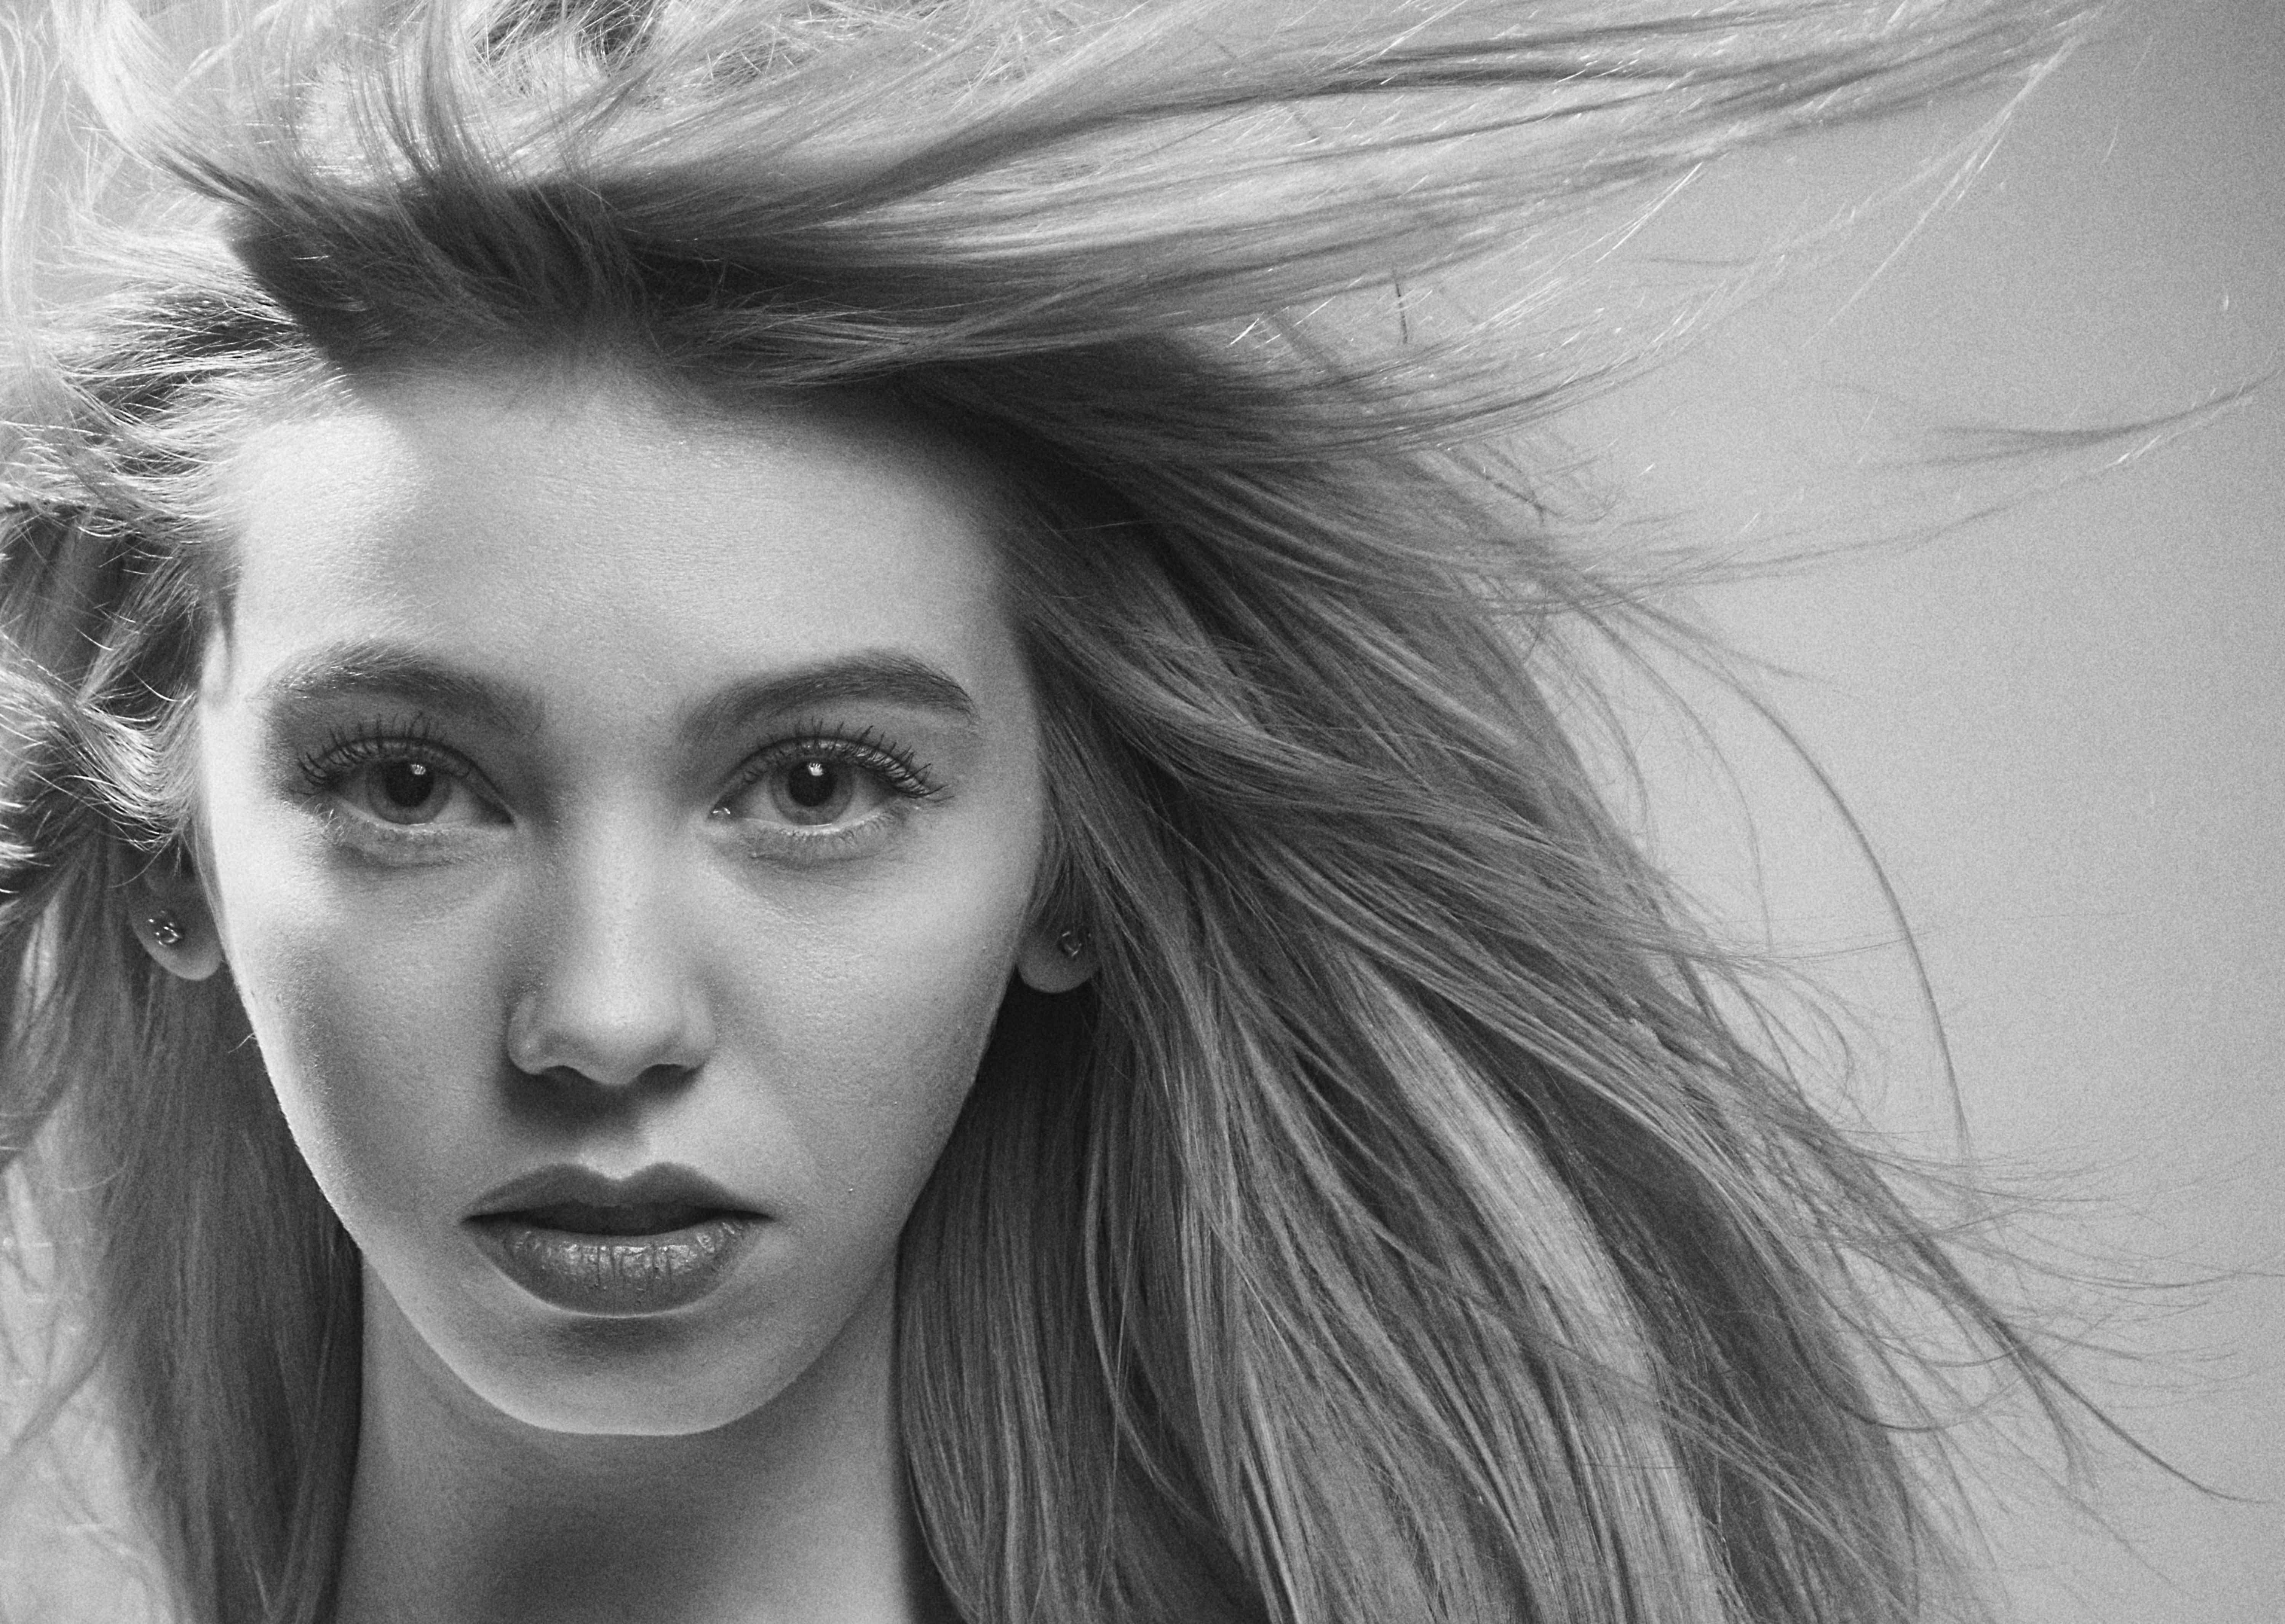 Profile of a Beautiful Girl - Free Stock Photo by Alexander Krivitskiy on